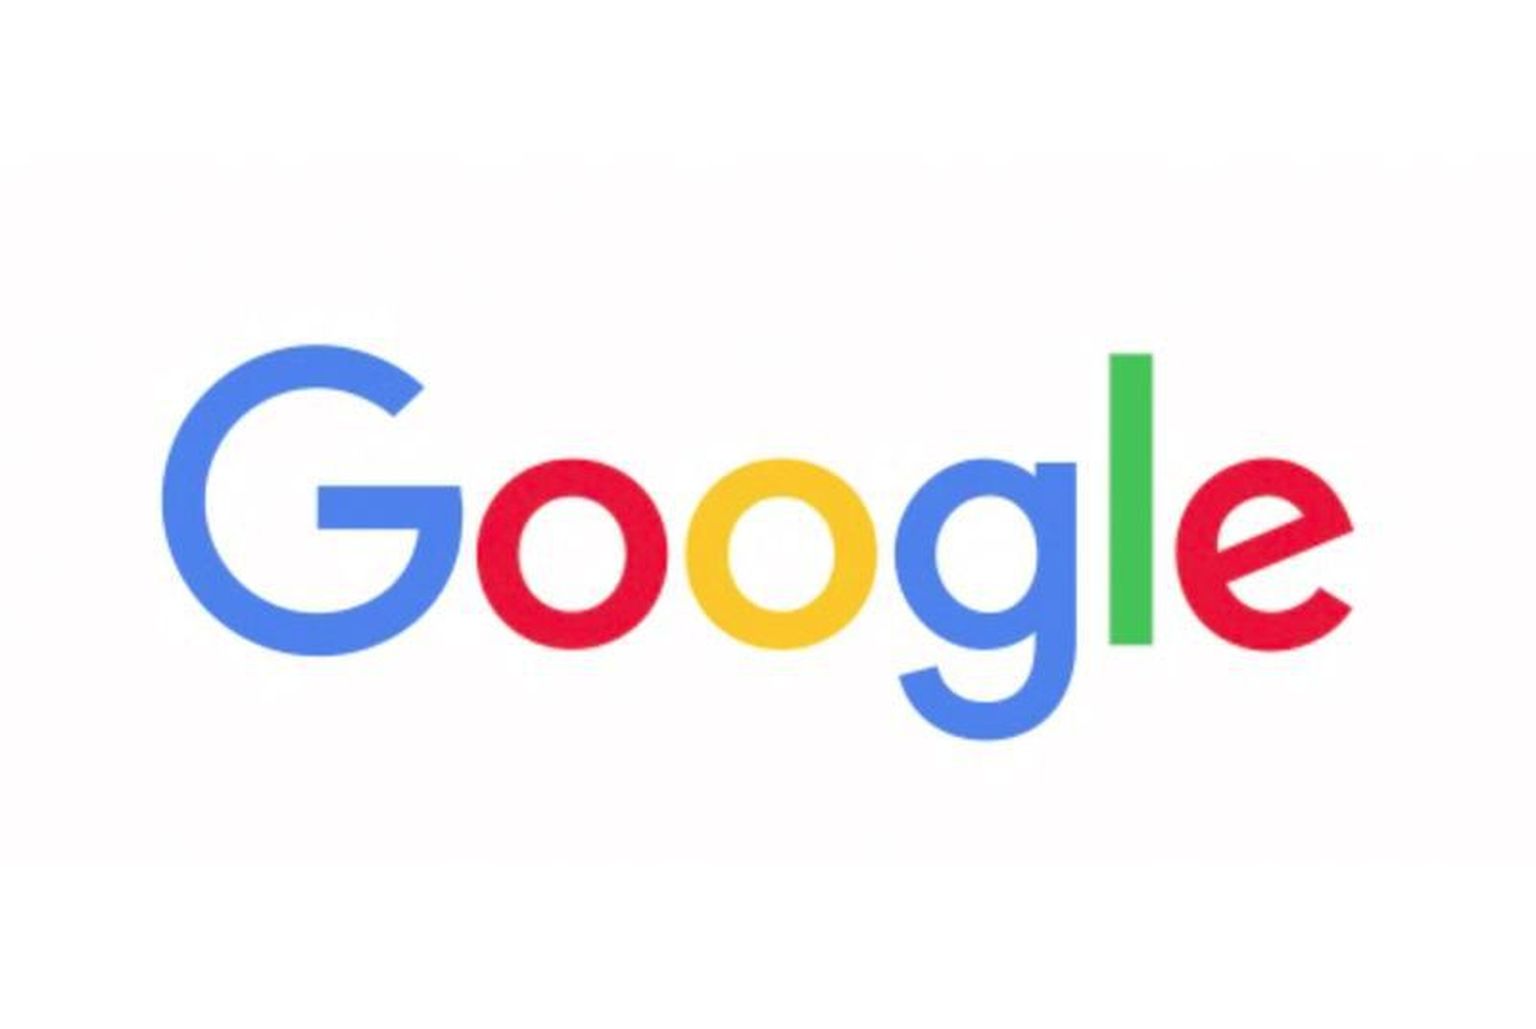 Логотип Google. Иллюстративное фото.